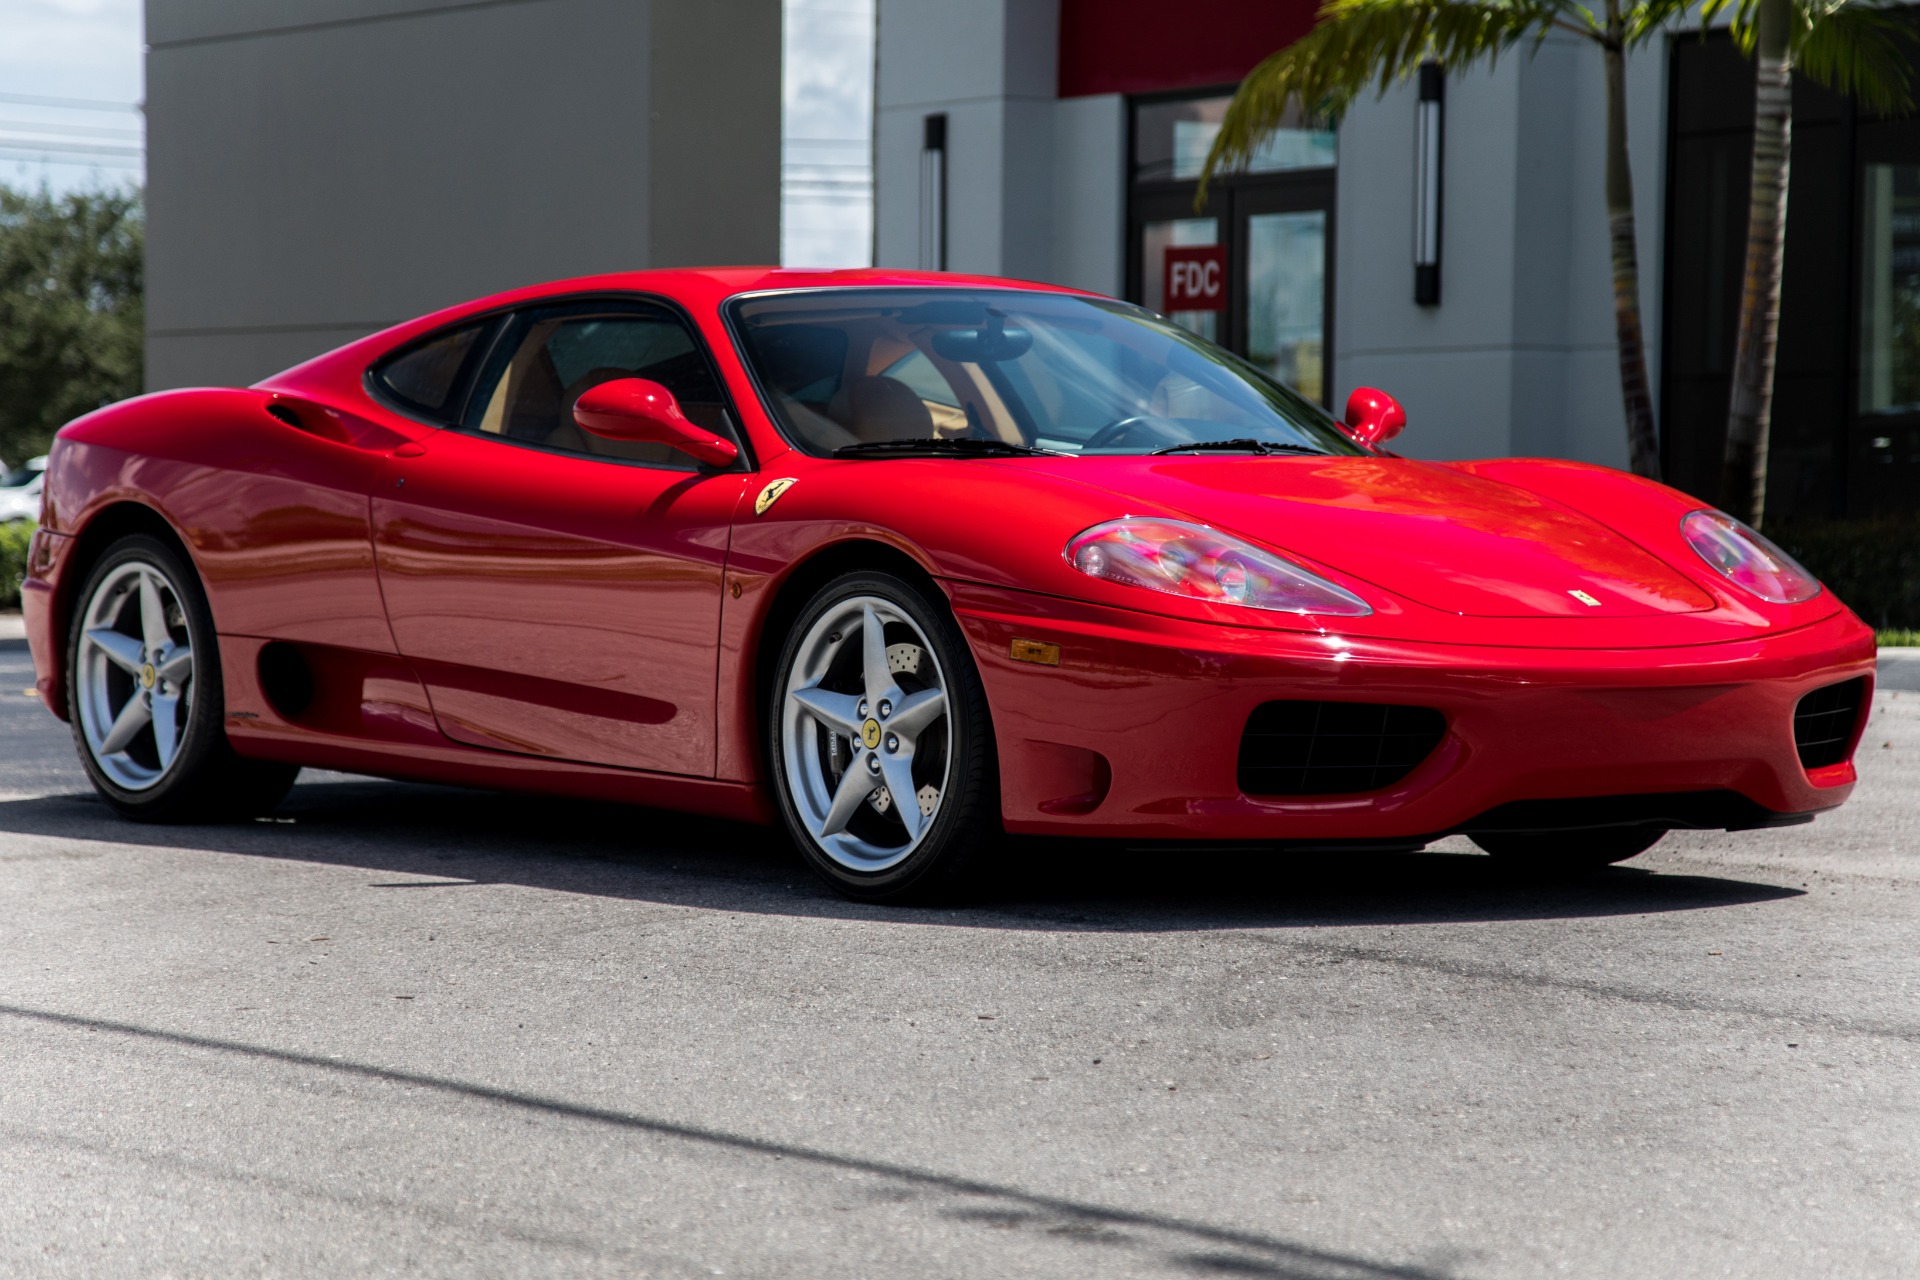 Used 2000 Ferrari 360 Modena For Sale ($84,900) | Marino Performance ...